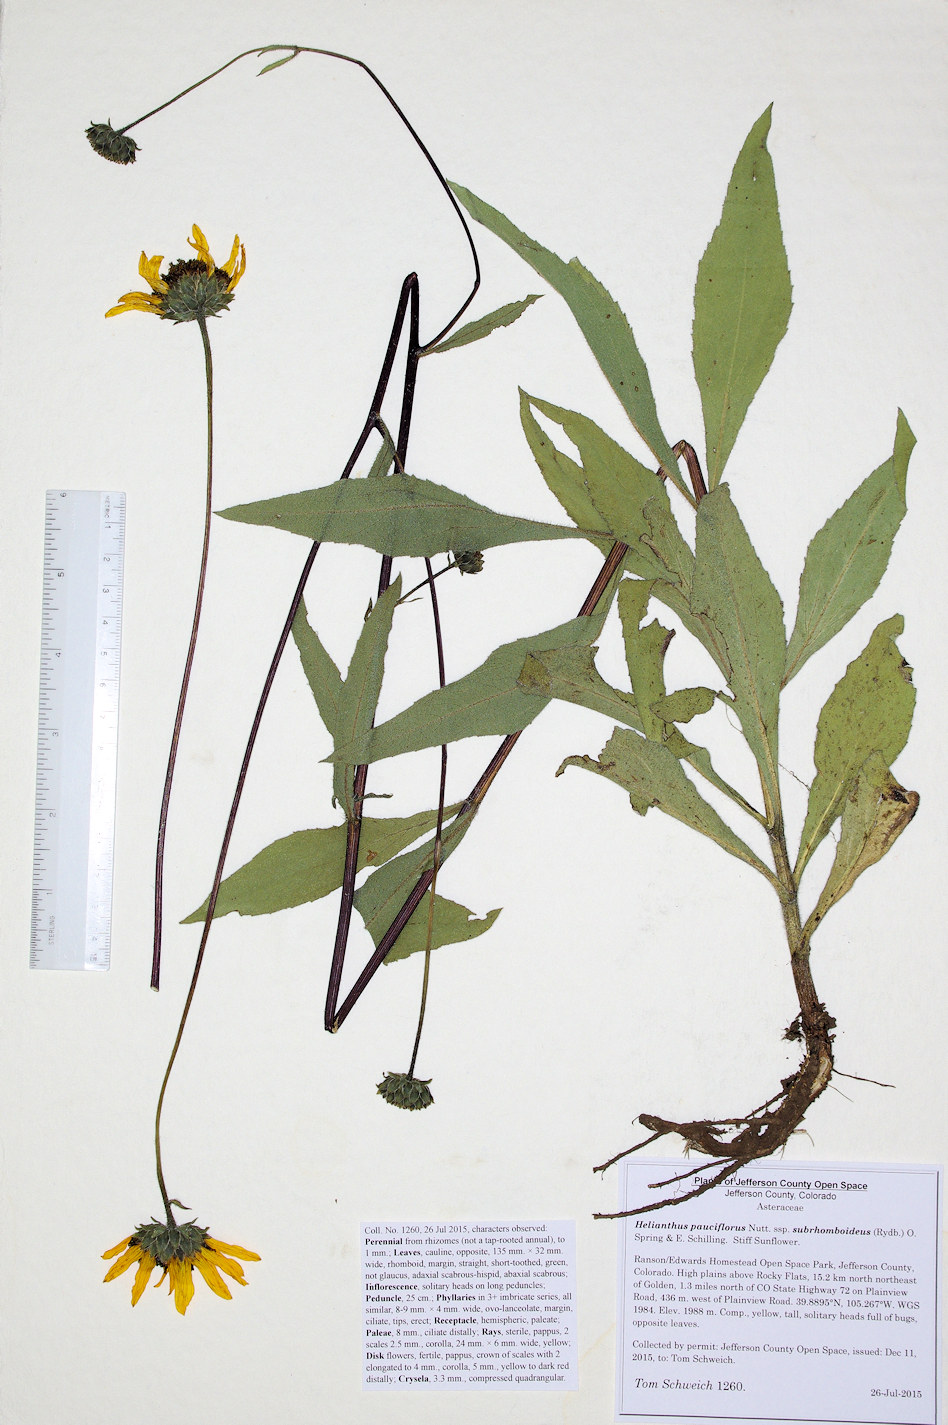 Asteraceae Helianthus pauciflorus subrhomboideus